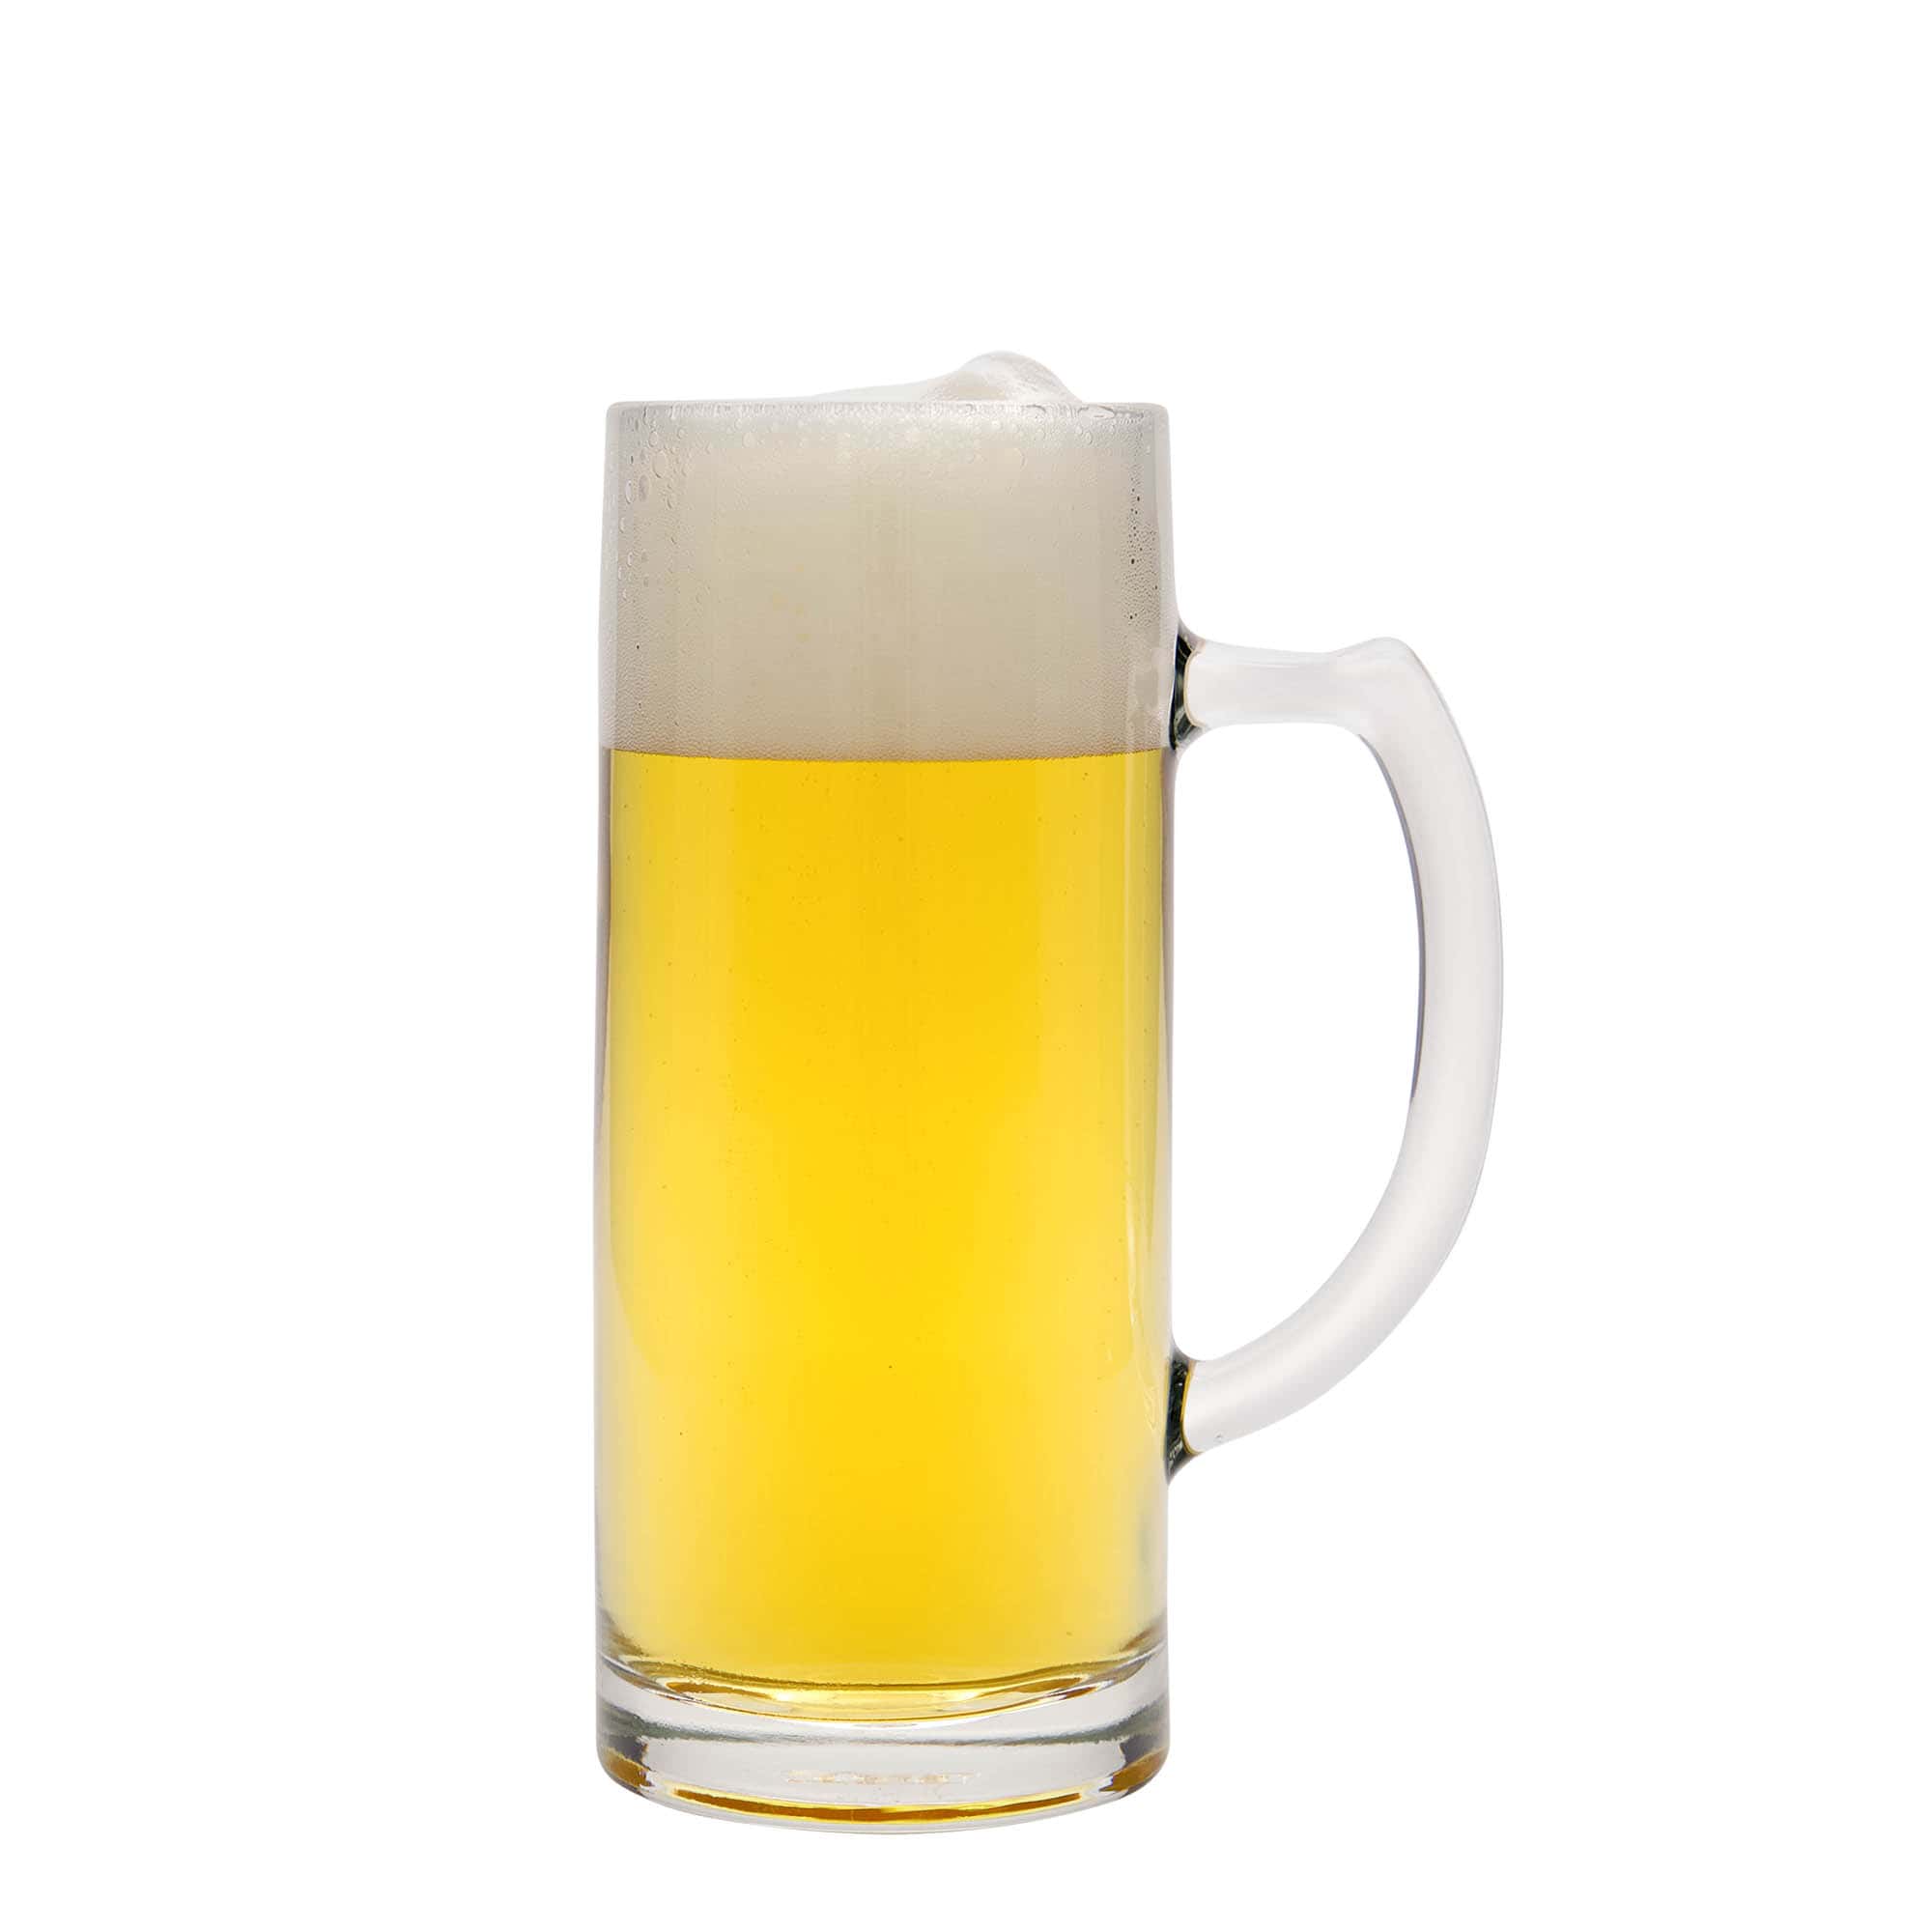 500 ml beer mug 'Gutsherren', glass